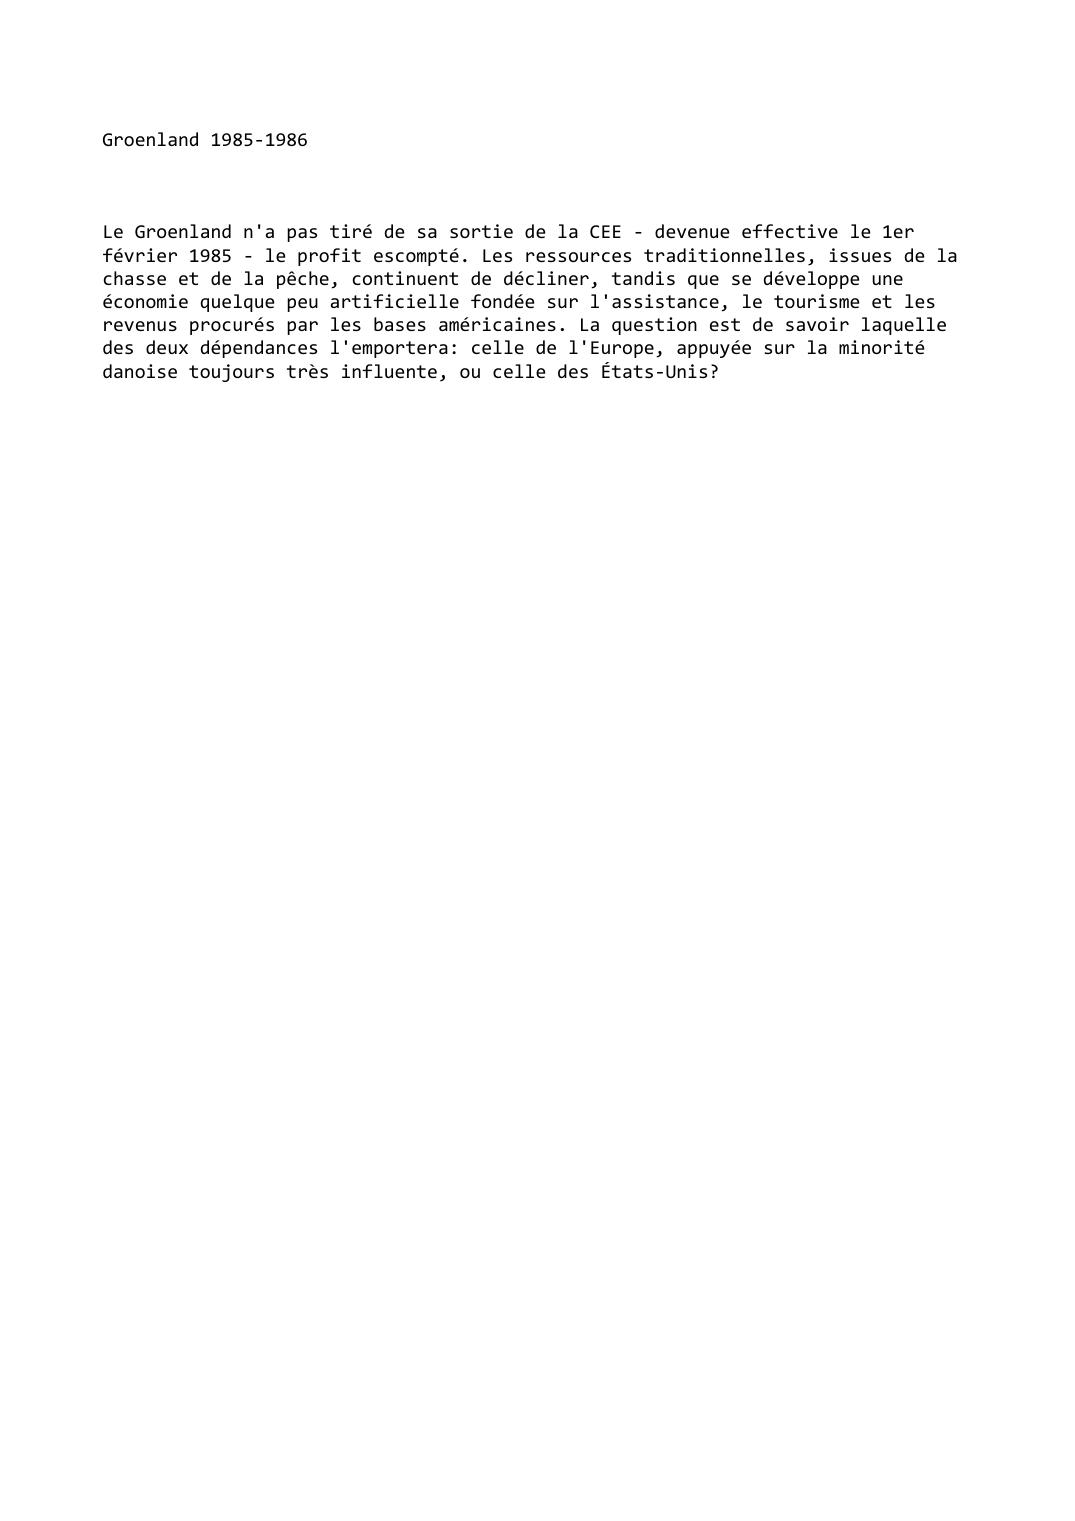 Prévisualisation du document Groenland (1985-1986)